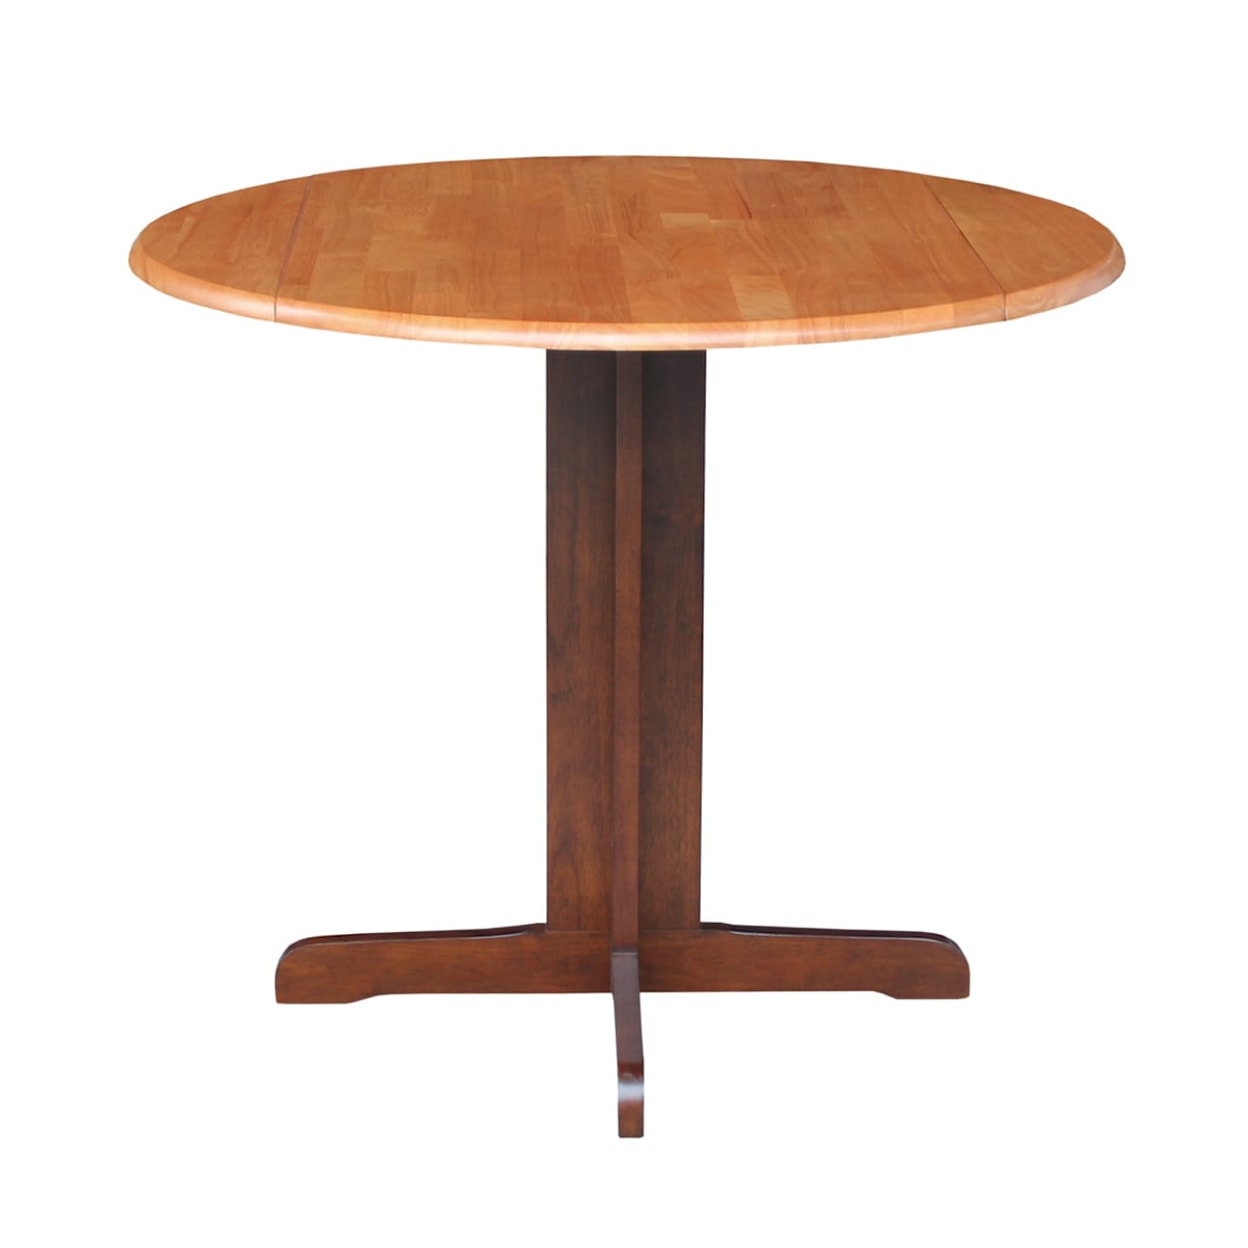 John Thomas Dining Essentials Pedestal Table in Cinnamon & Espresso